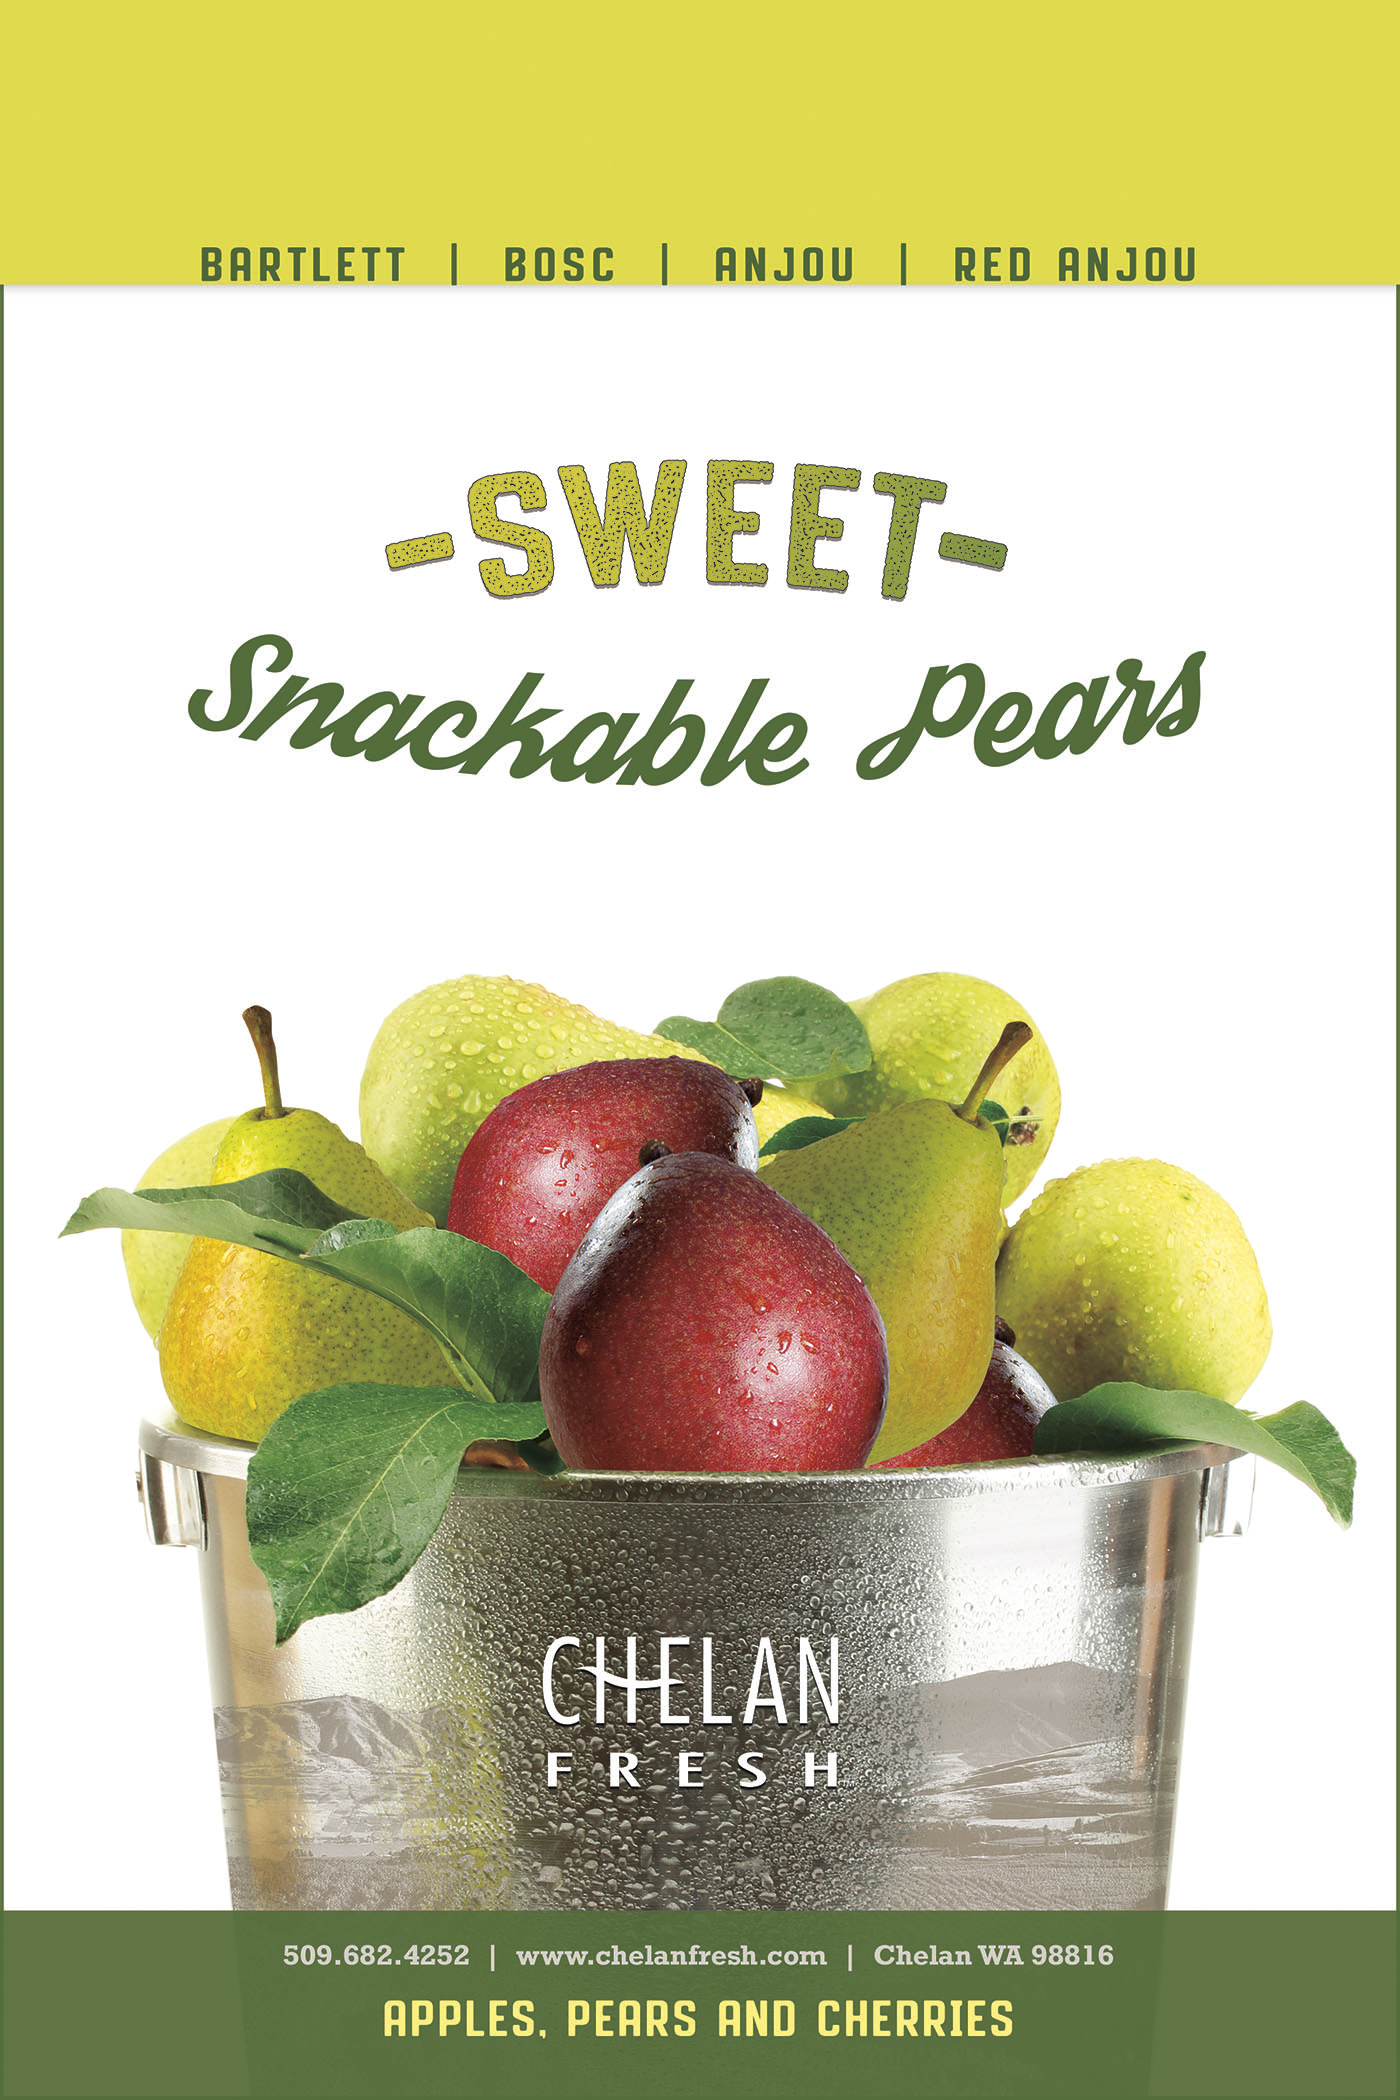 Chelan Fresh Pears.jpg